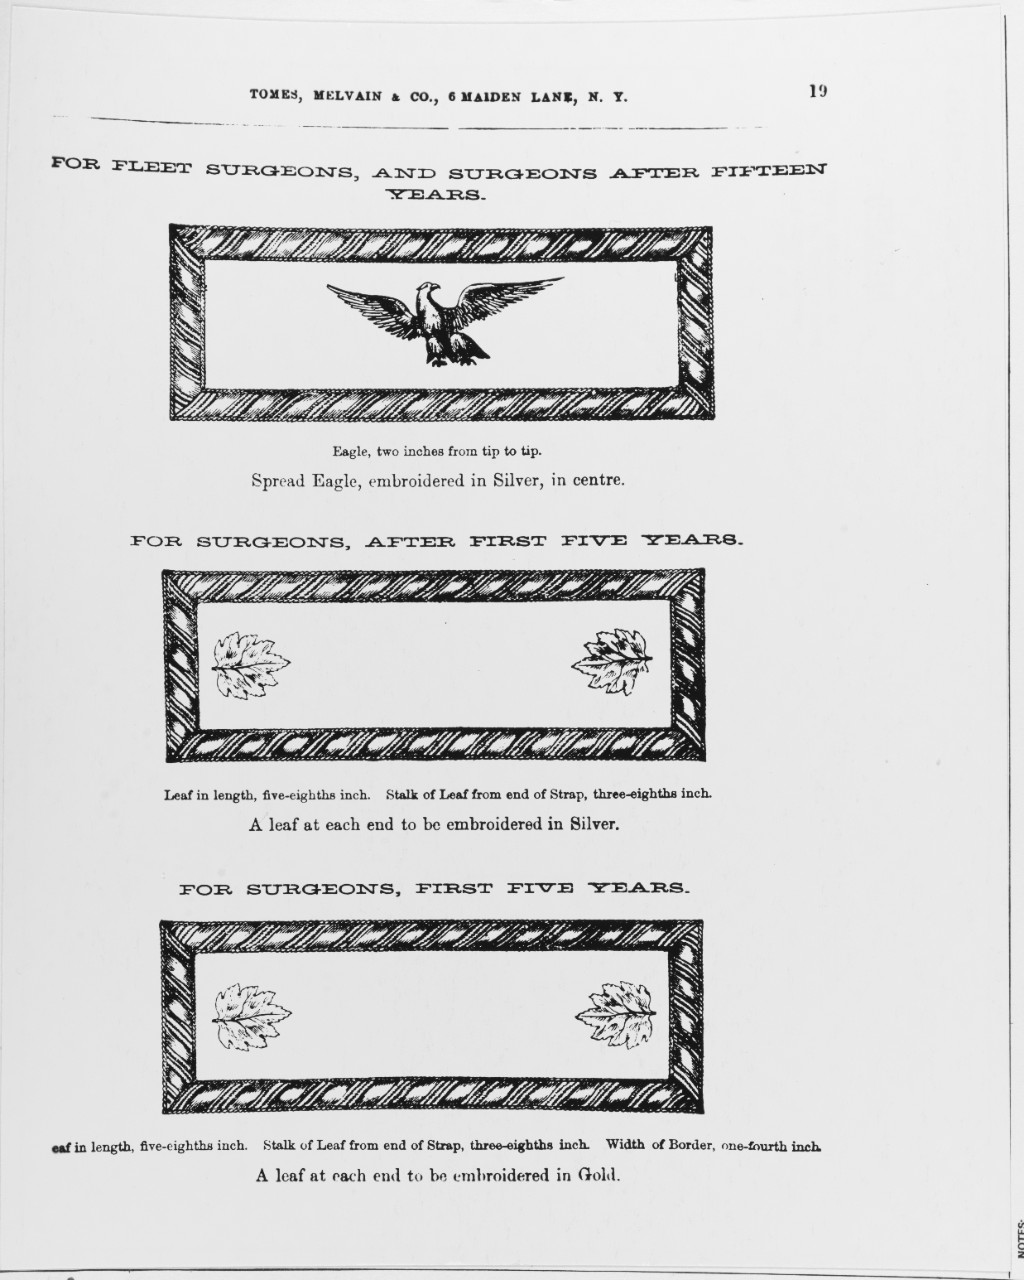 Uniform Regulations, 1864. Shoulder Insignia for Fleet Surgeons